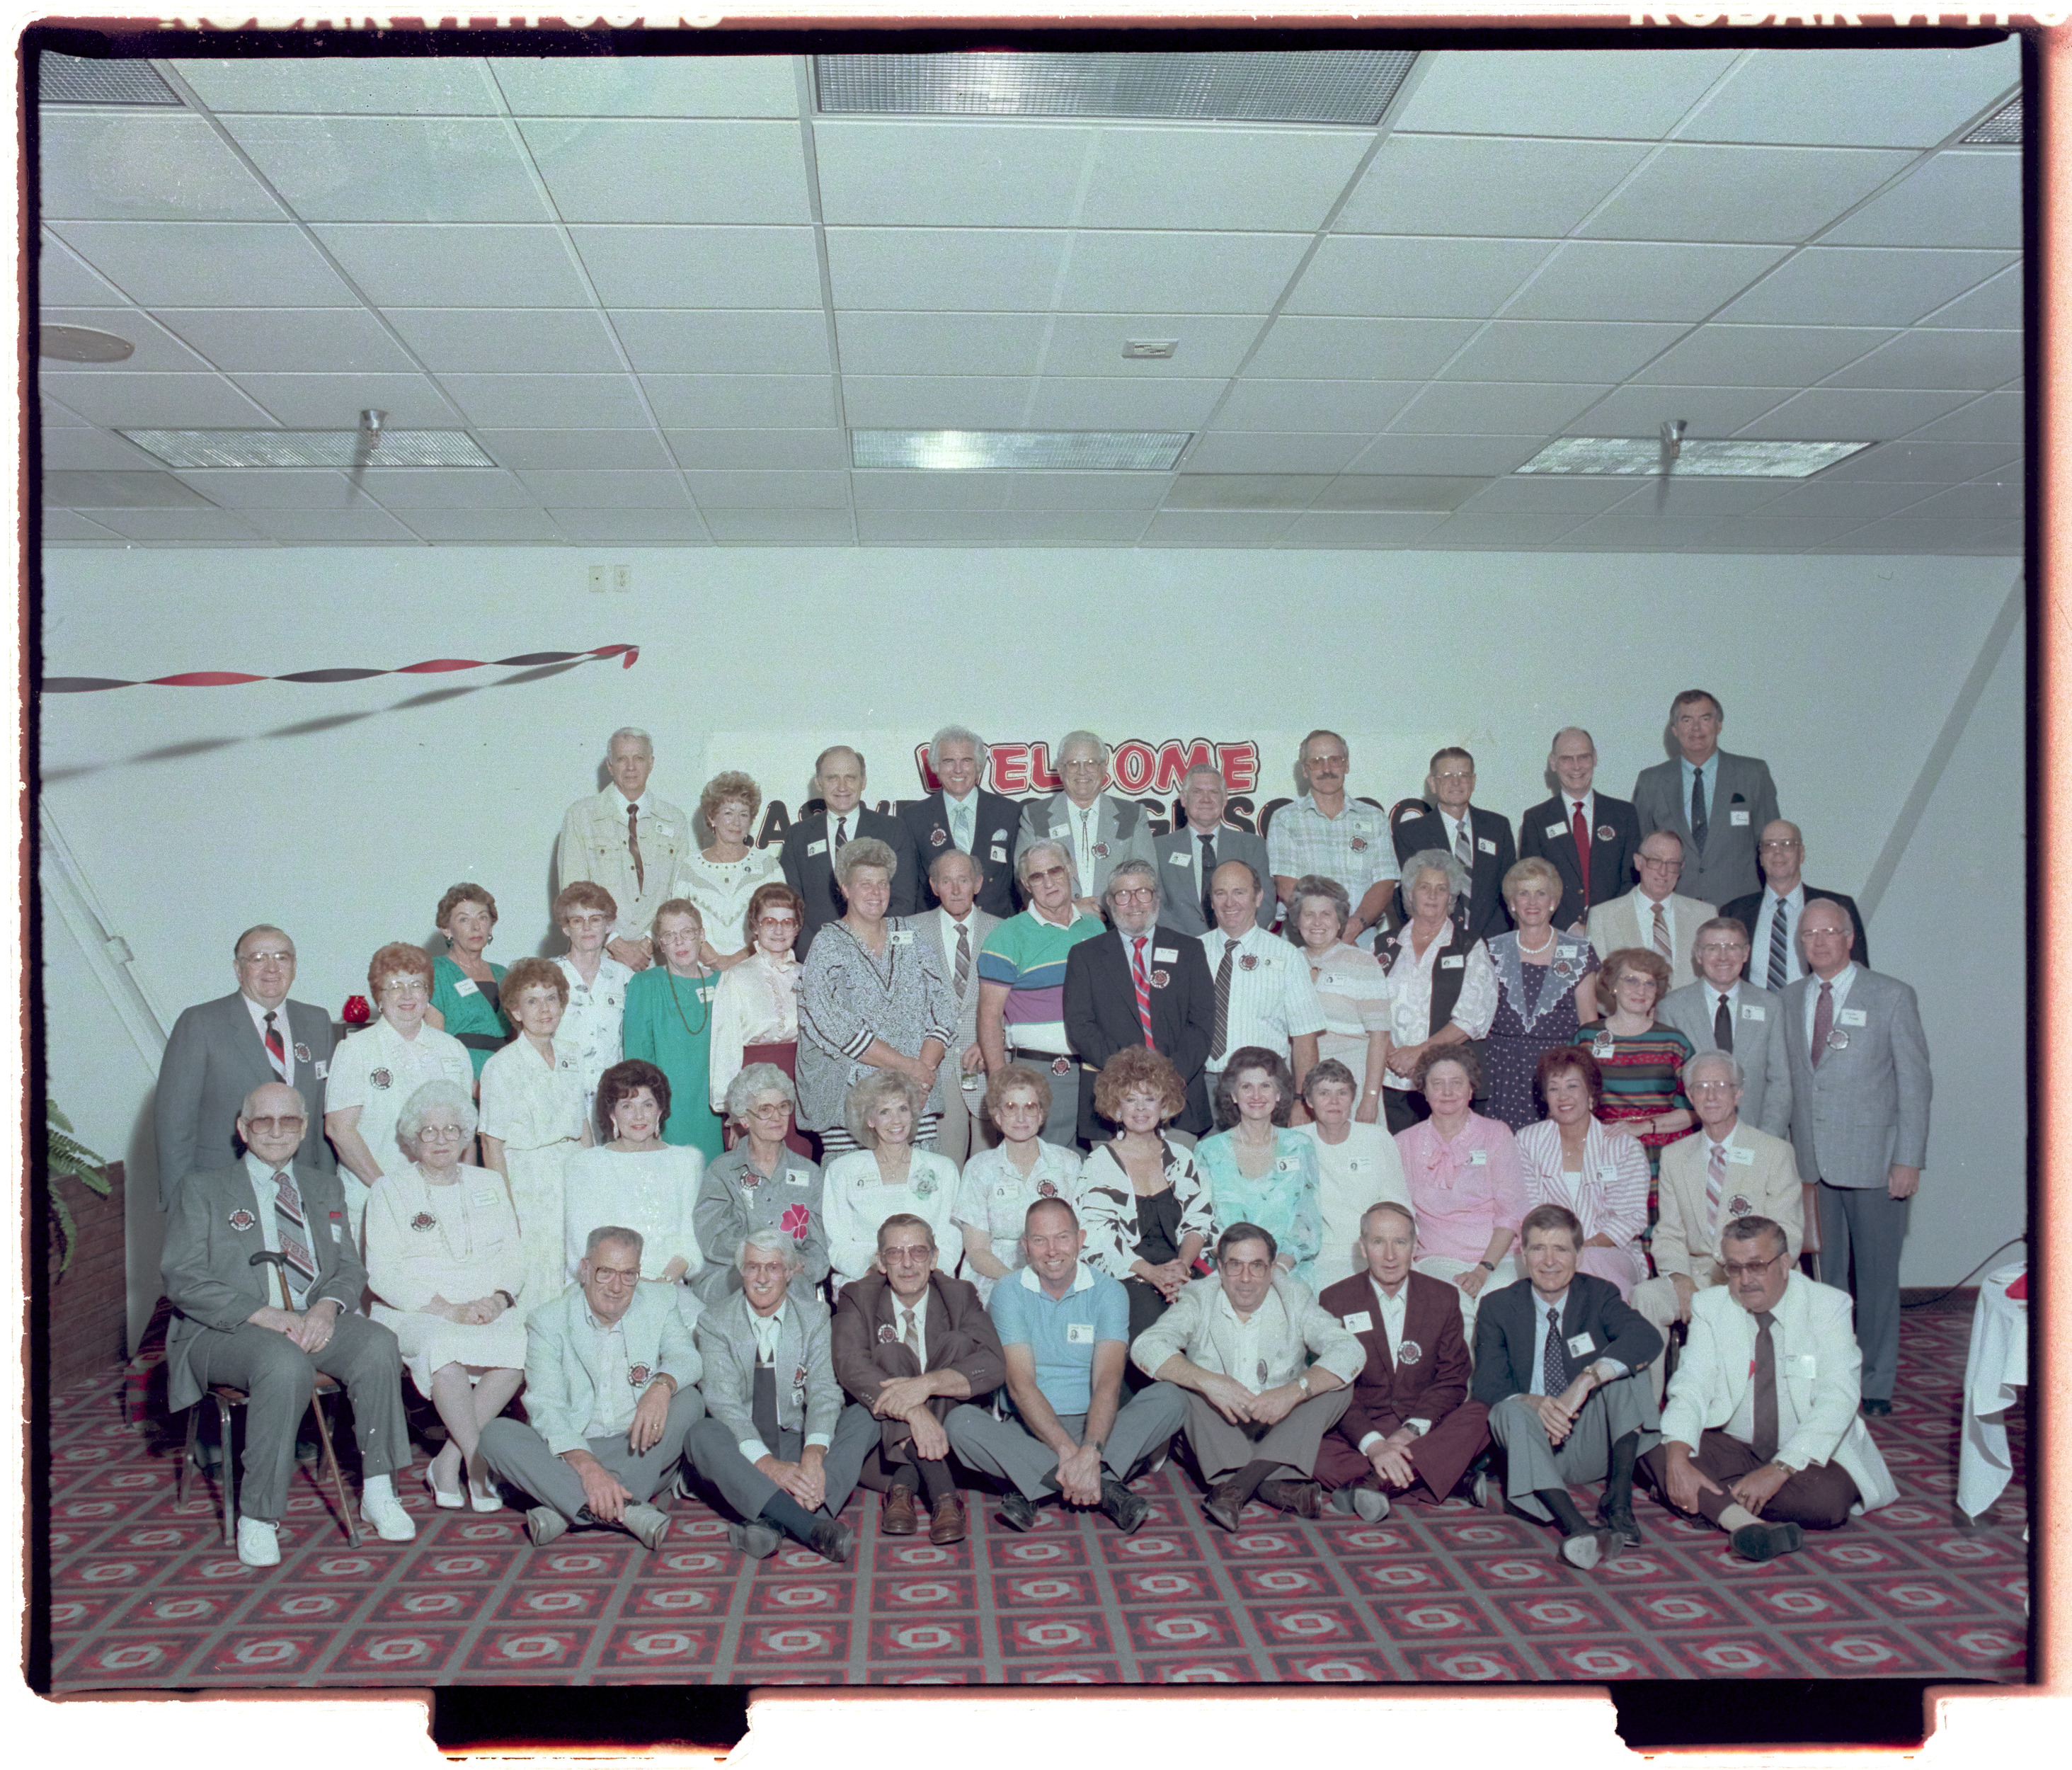 Photographs of LVHS Class Reunion, image 02